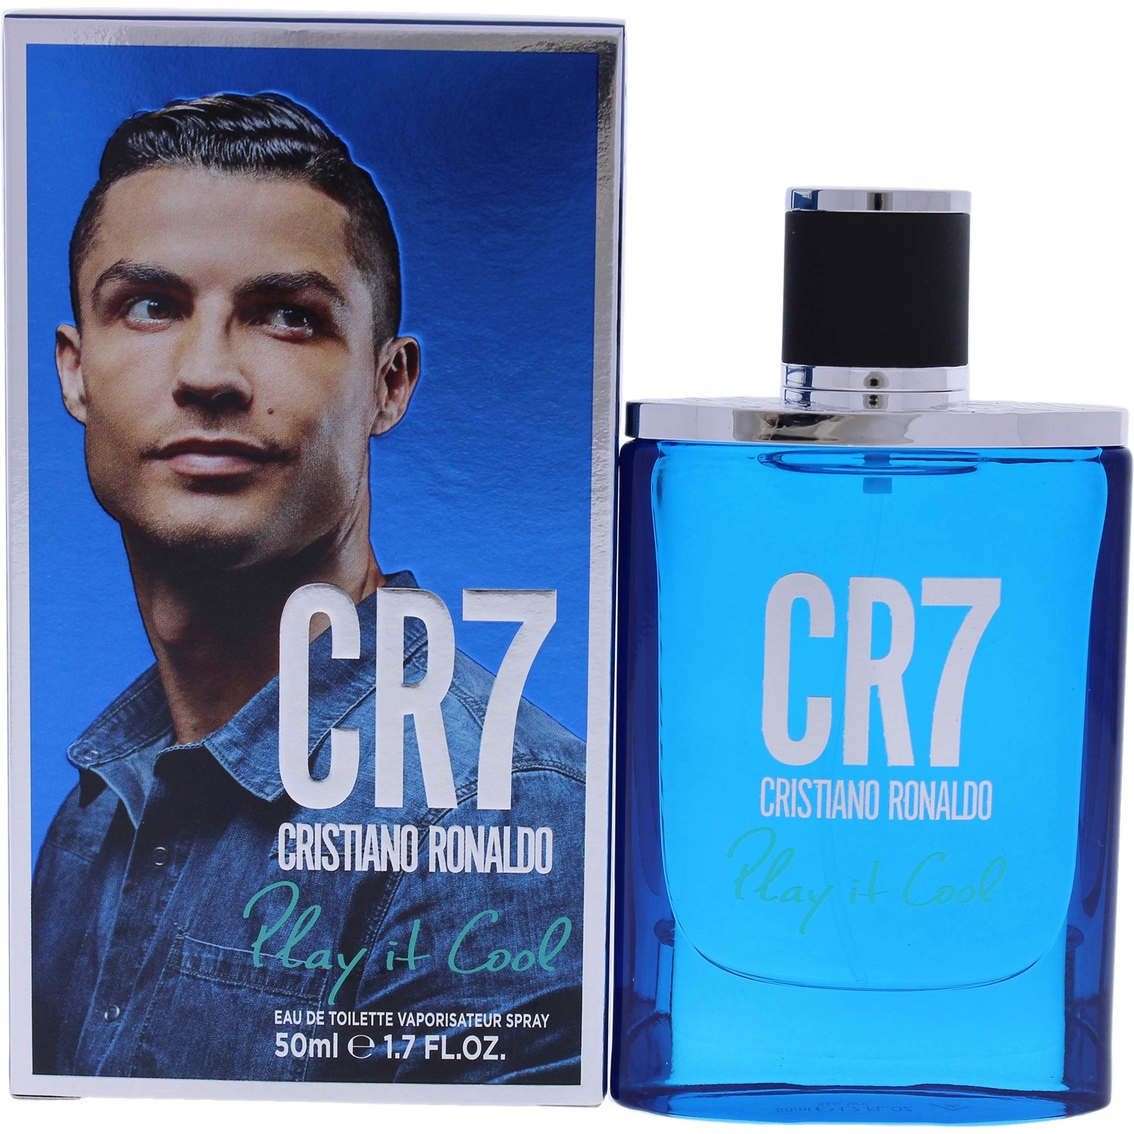 Cristiano Ronaldo CR7 Play It Cool for Men Eau de Toilette Spray - Image 2 of 2